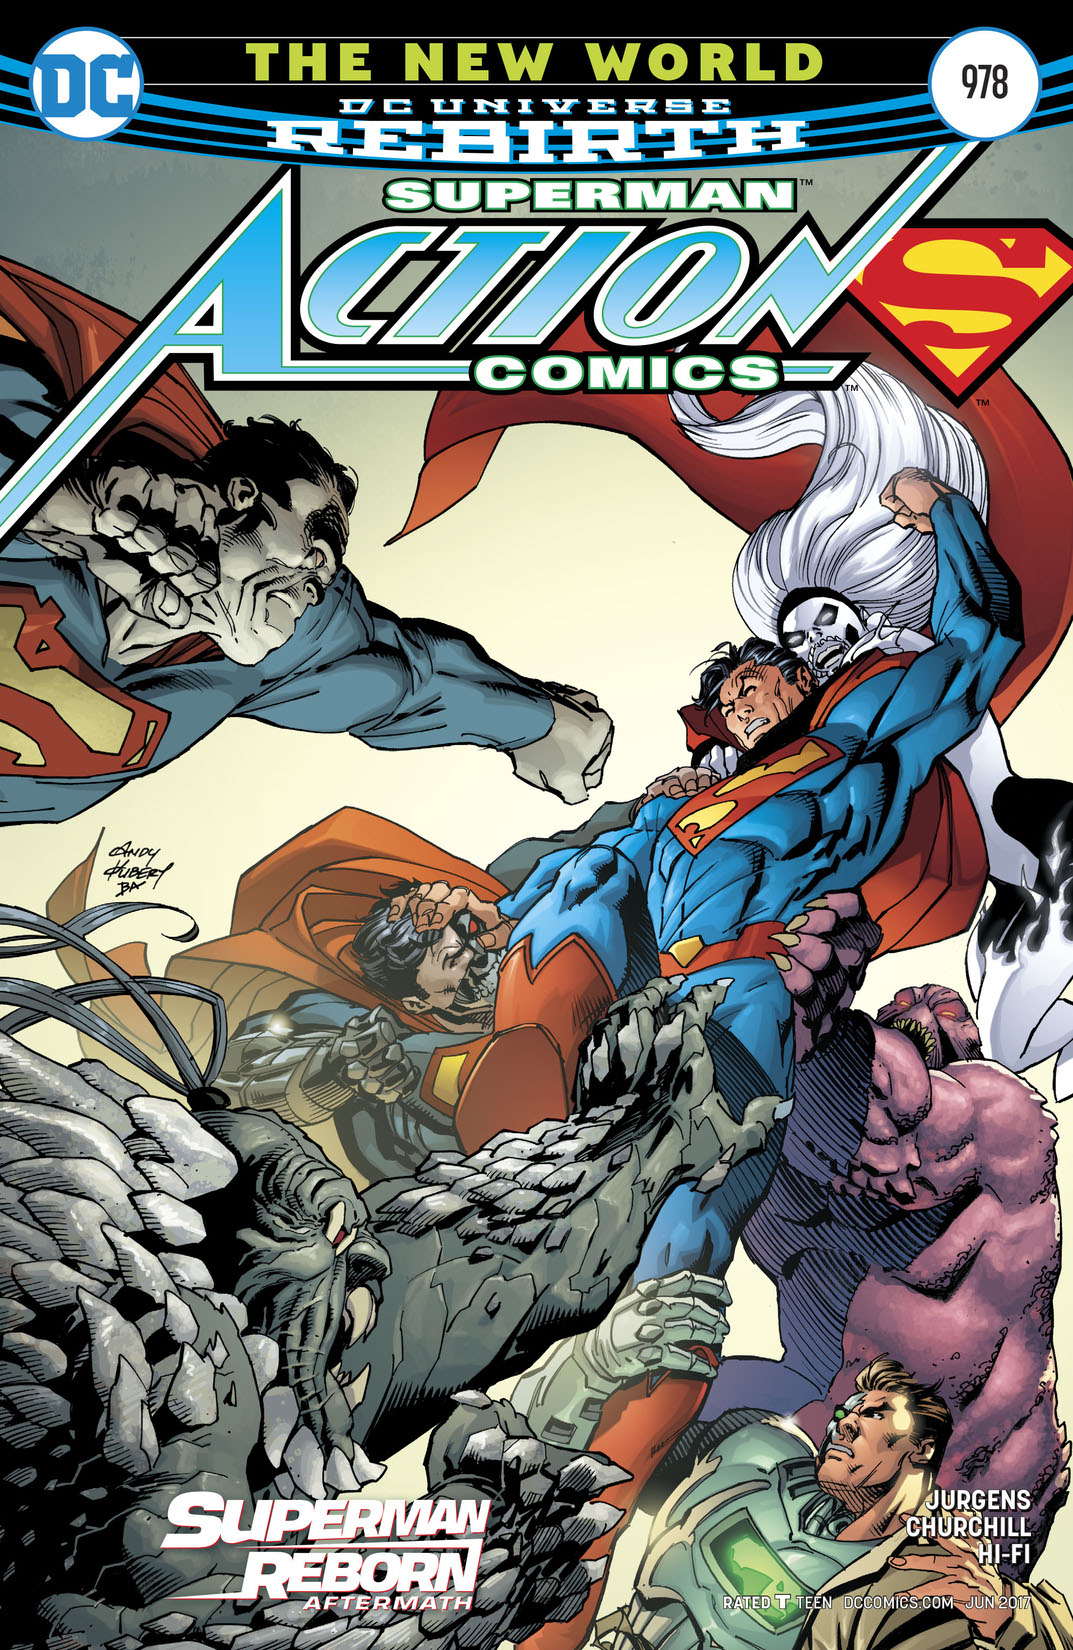 Action Comics (2016-) #978 preview images